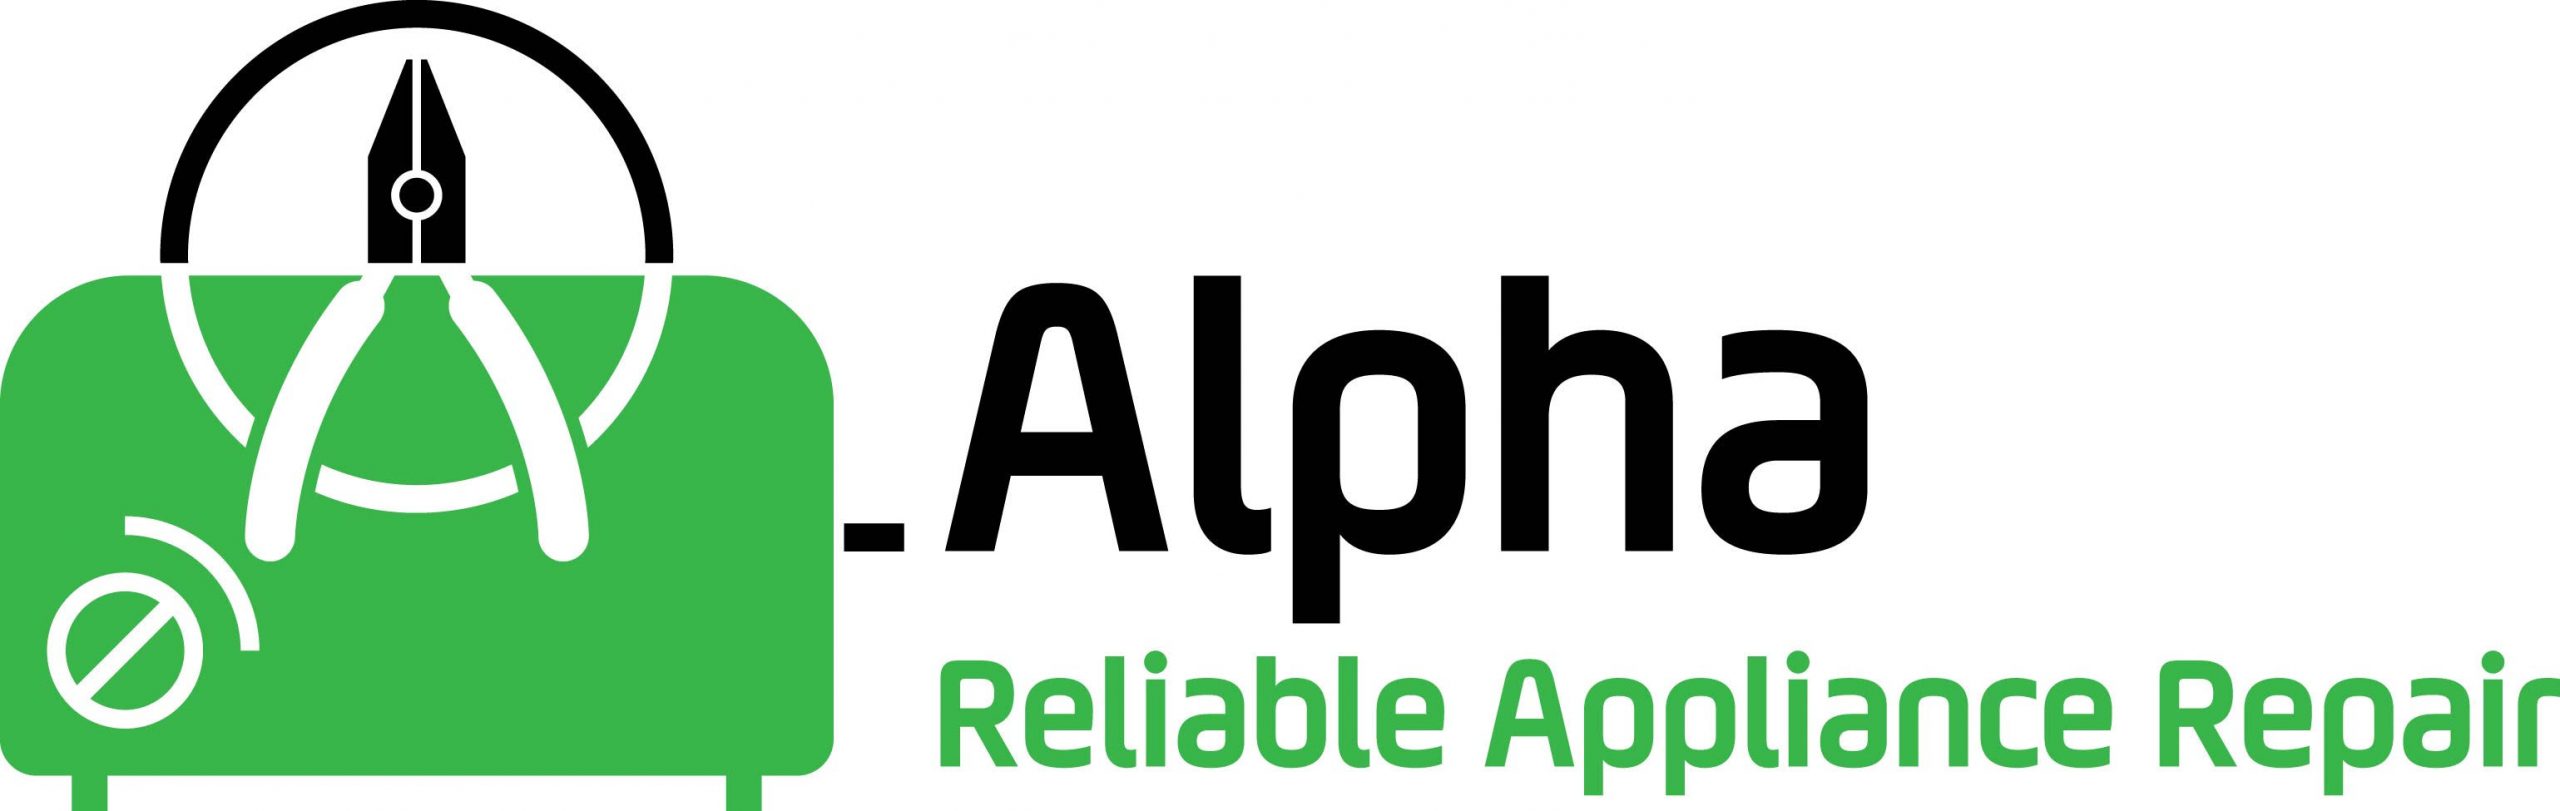 alpha appliance service logo